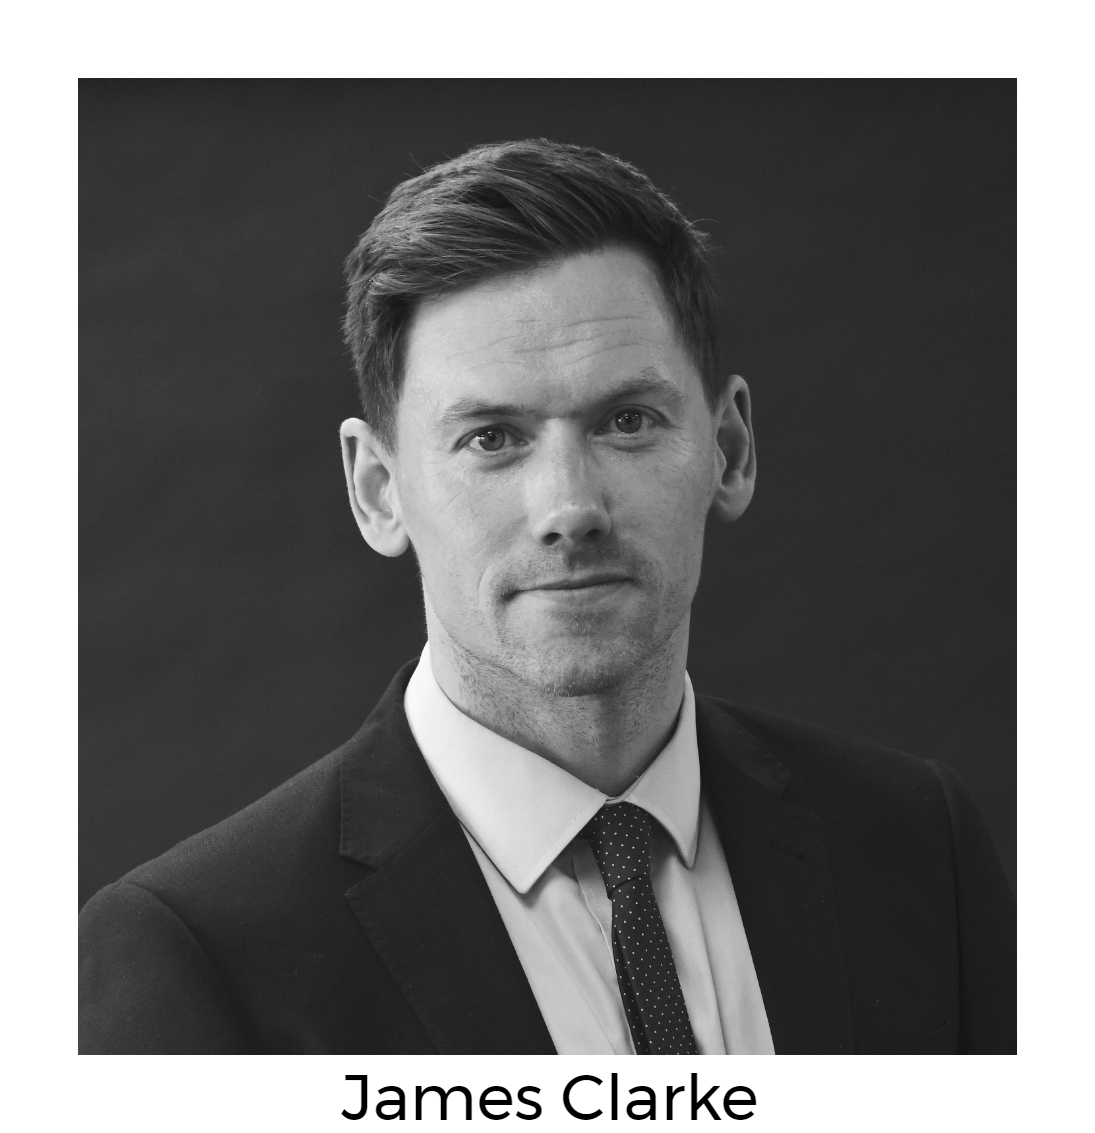 James Clarke